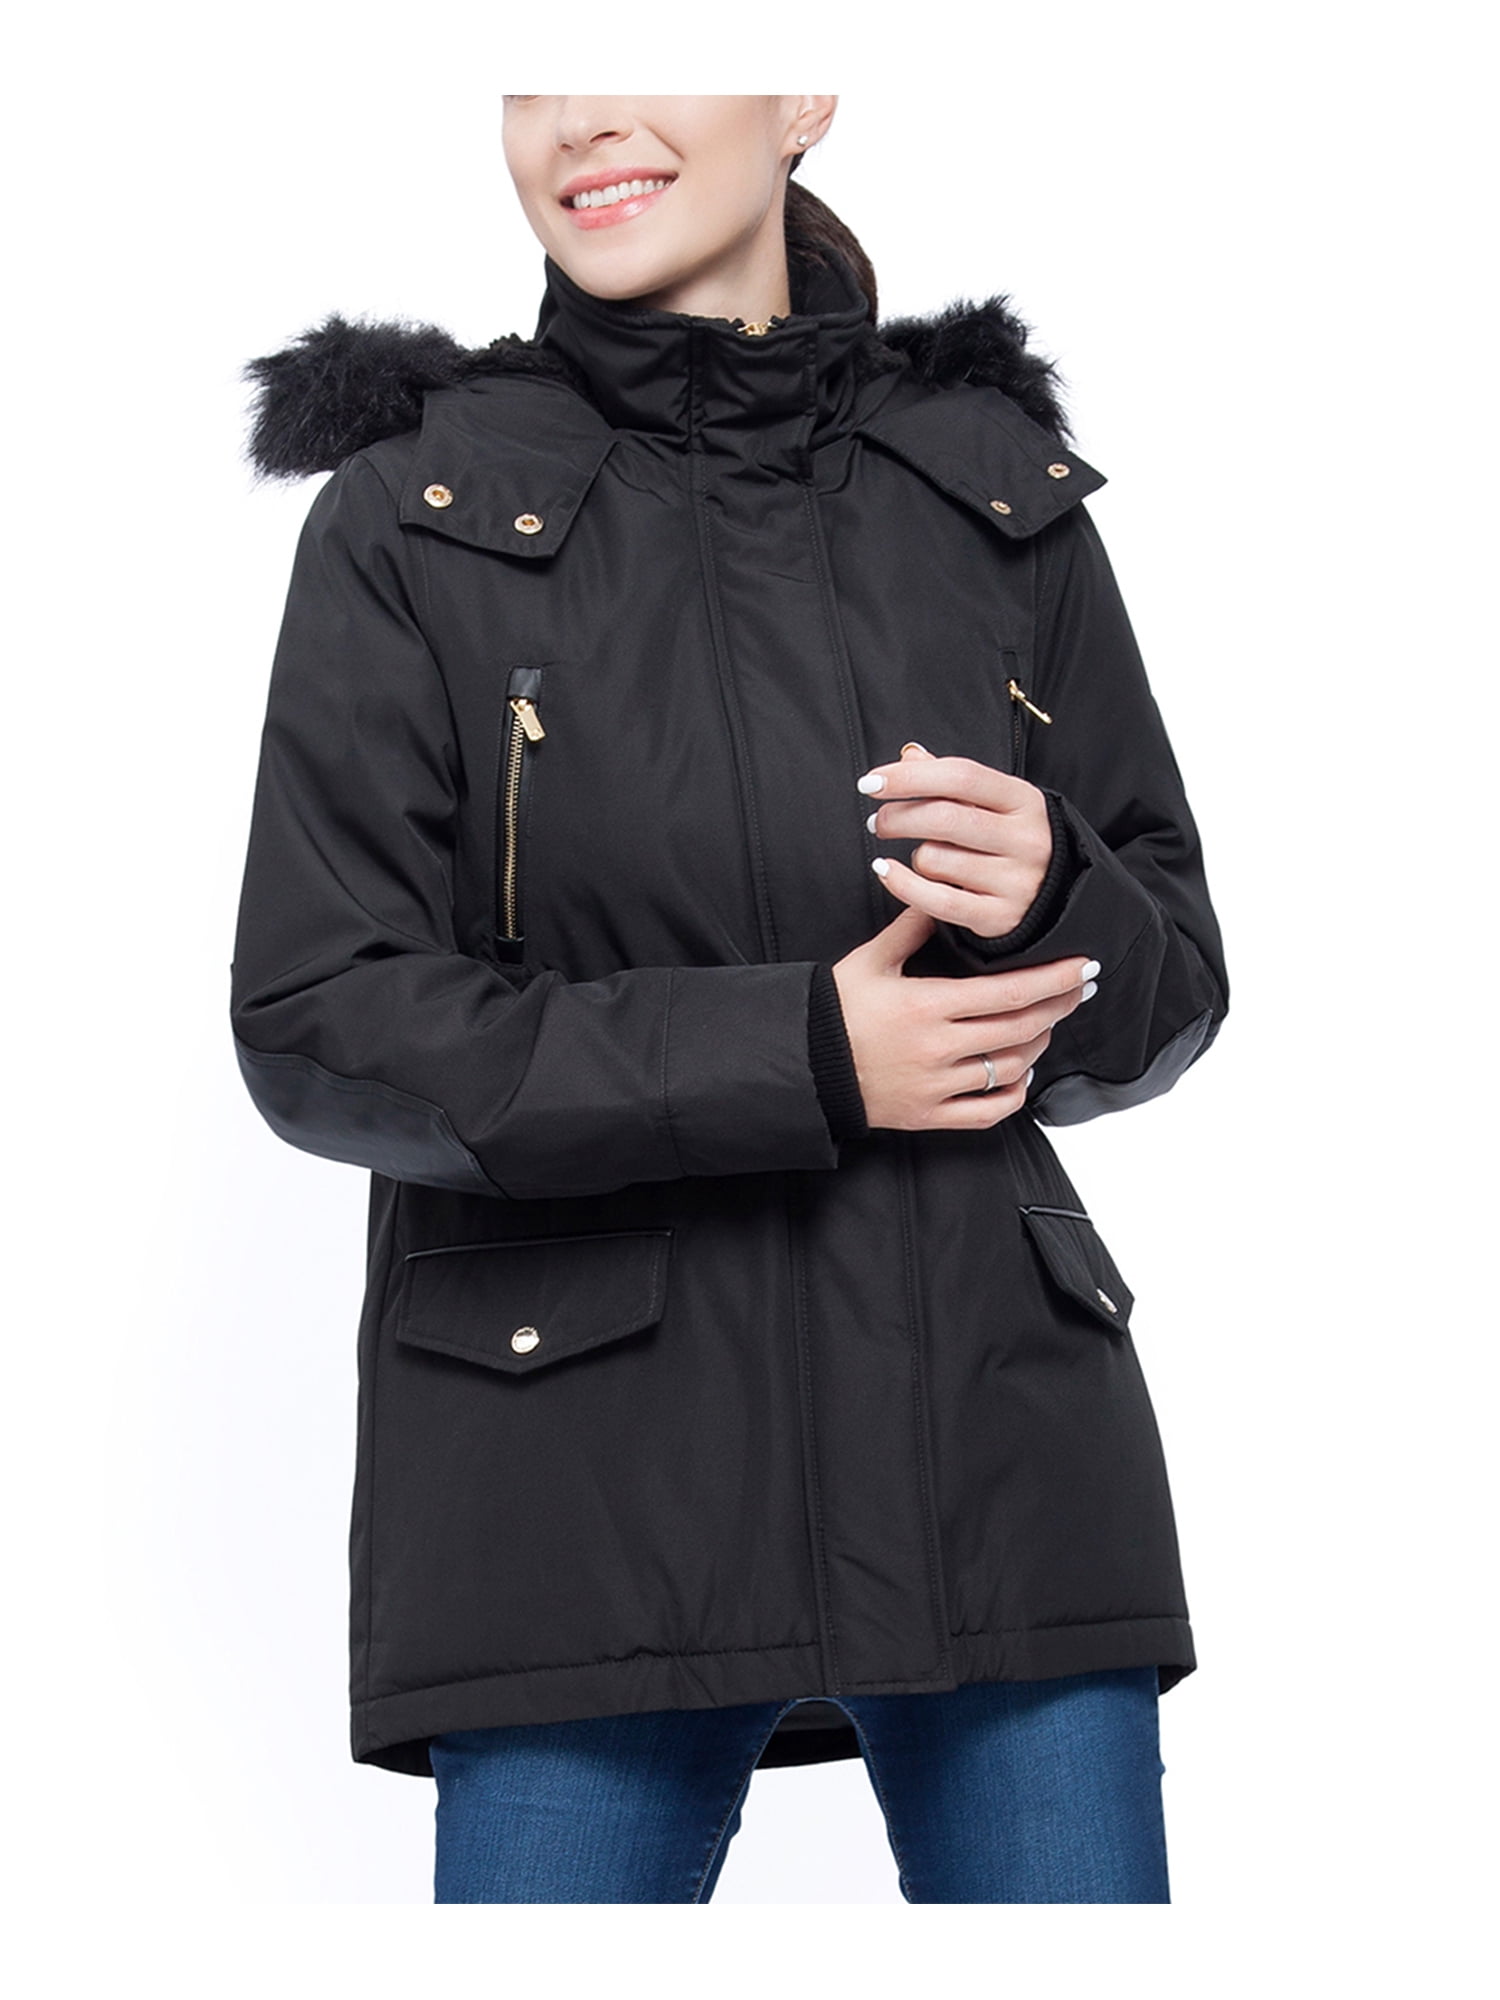 Rokka\u0026Rolla Women's Thickened Warm Parka Jacket Winter Coat with Removable Faux Fur Hood